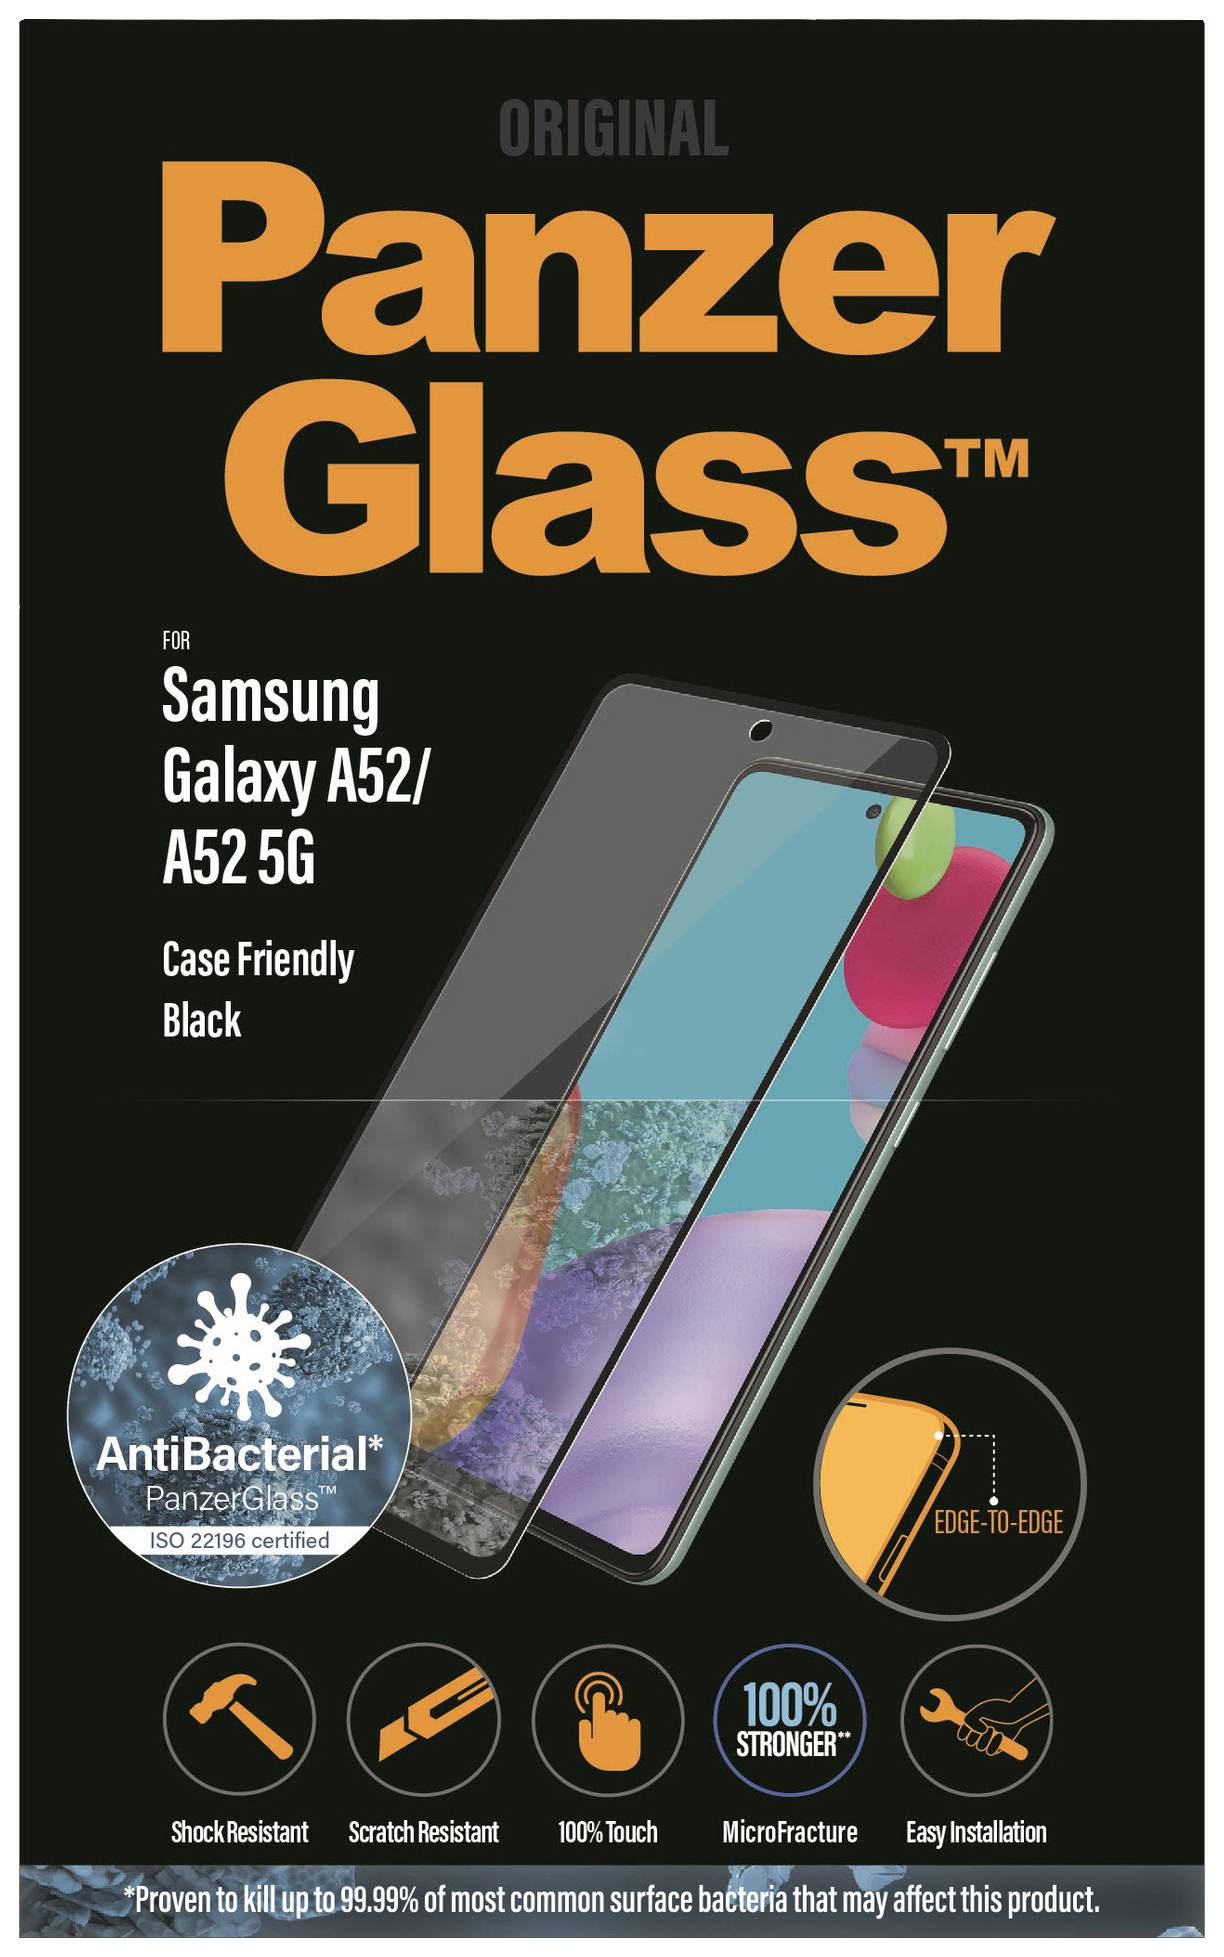 PANZERGLASS Samsung Galaxy A52 Case Friendly, Black AB